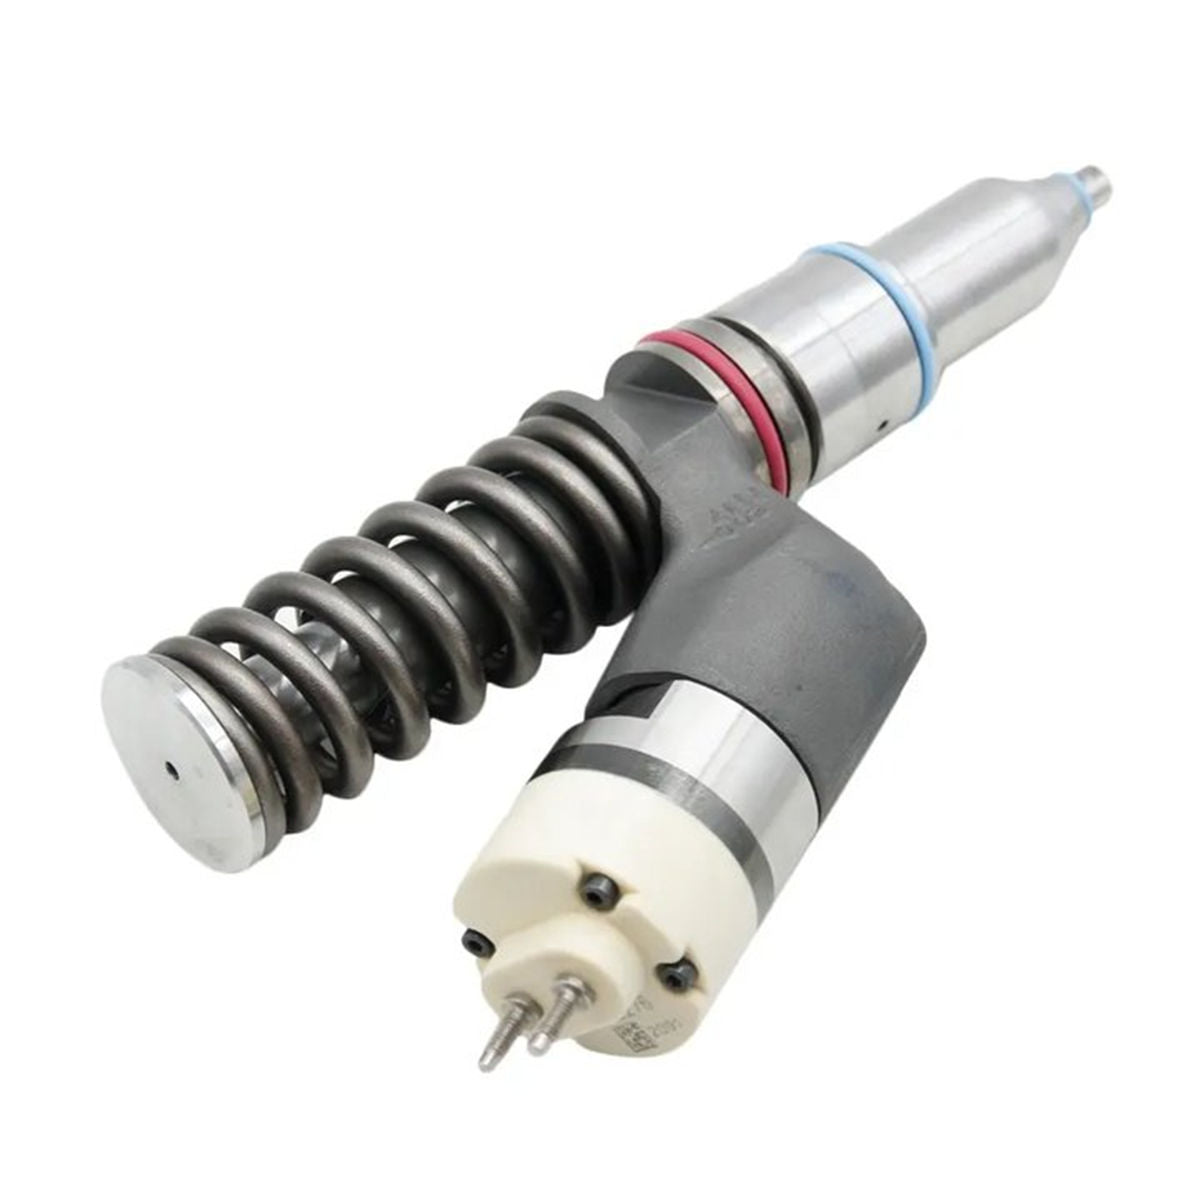 117-0482 1170482 Fuel Injector for Caterpillar 3406E Diesel Engine - Sinocmp